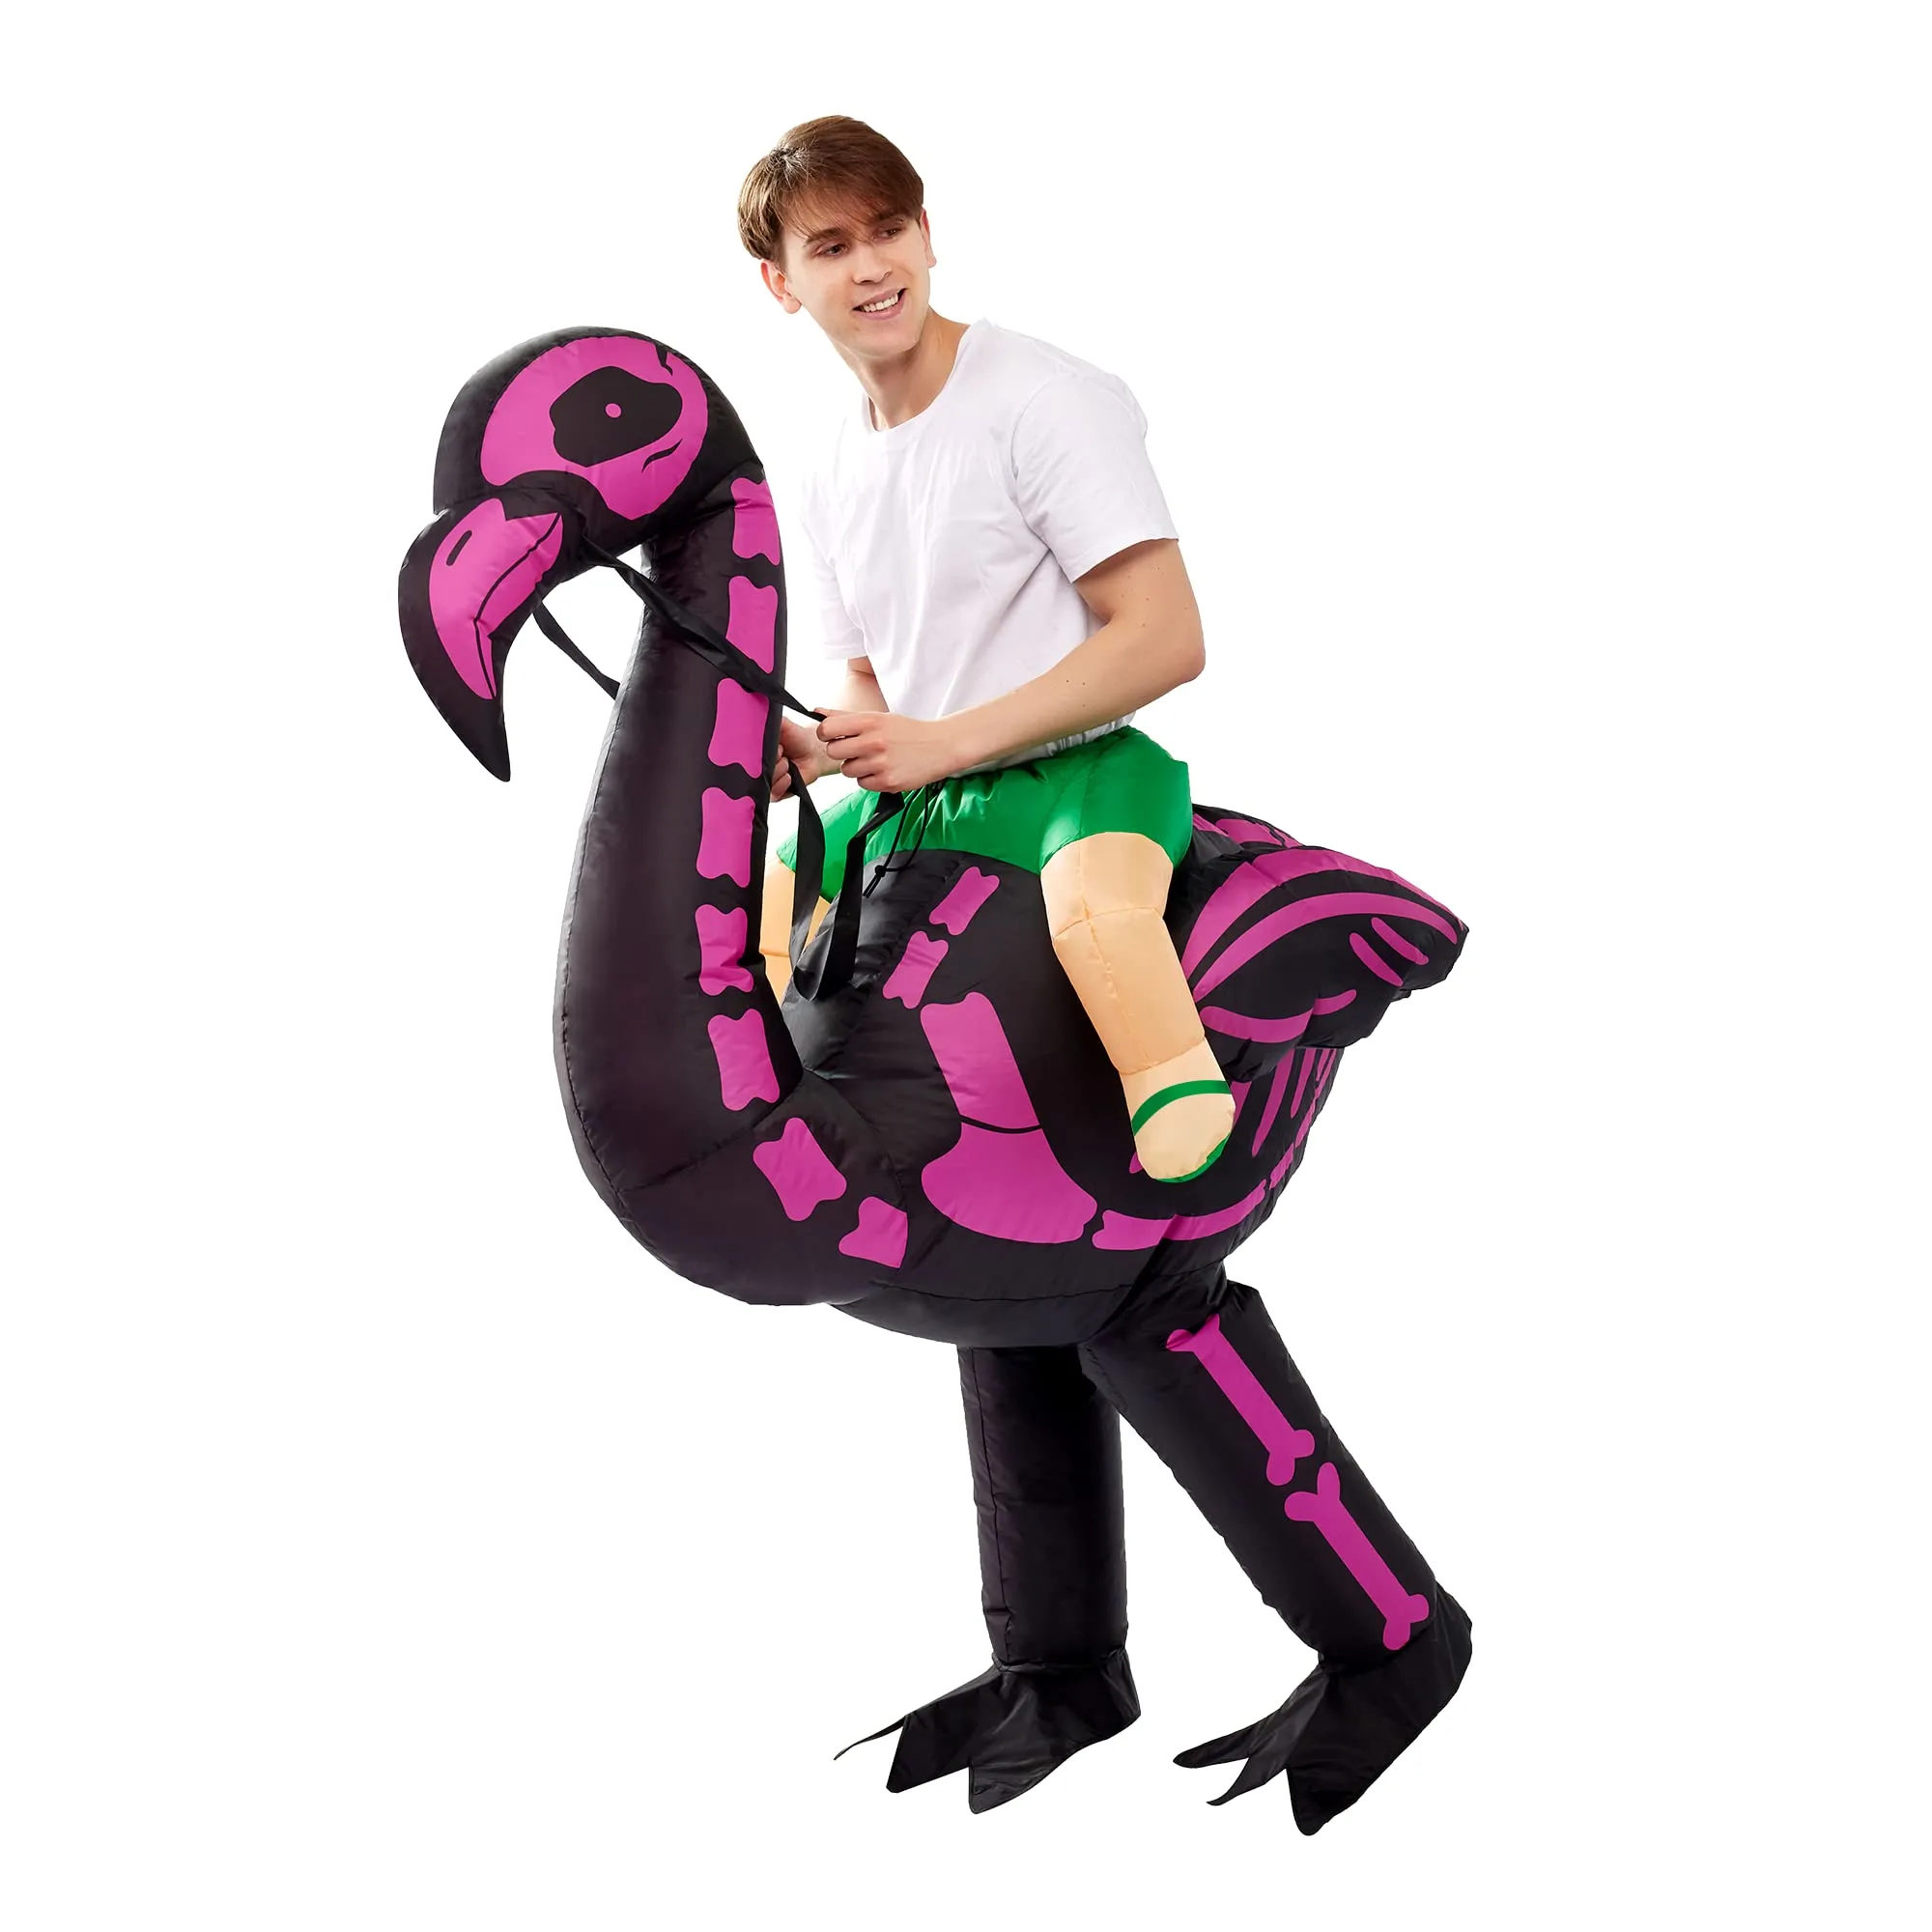 Adult Inflatable Balloon Animal Costume 